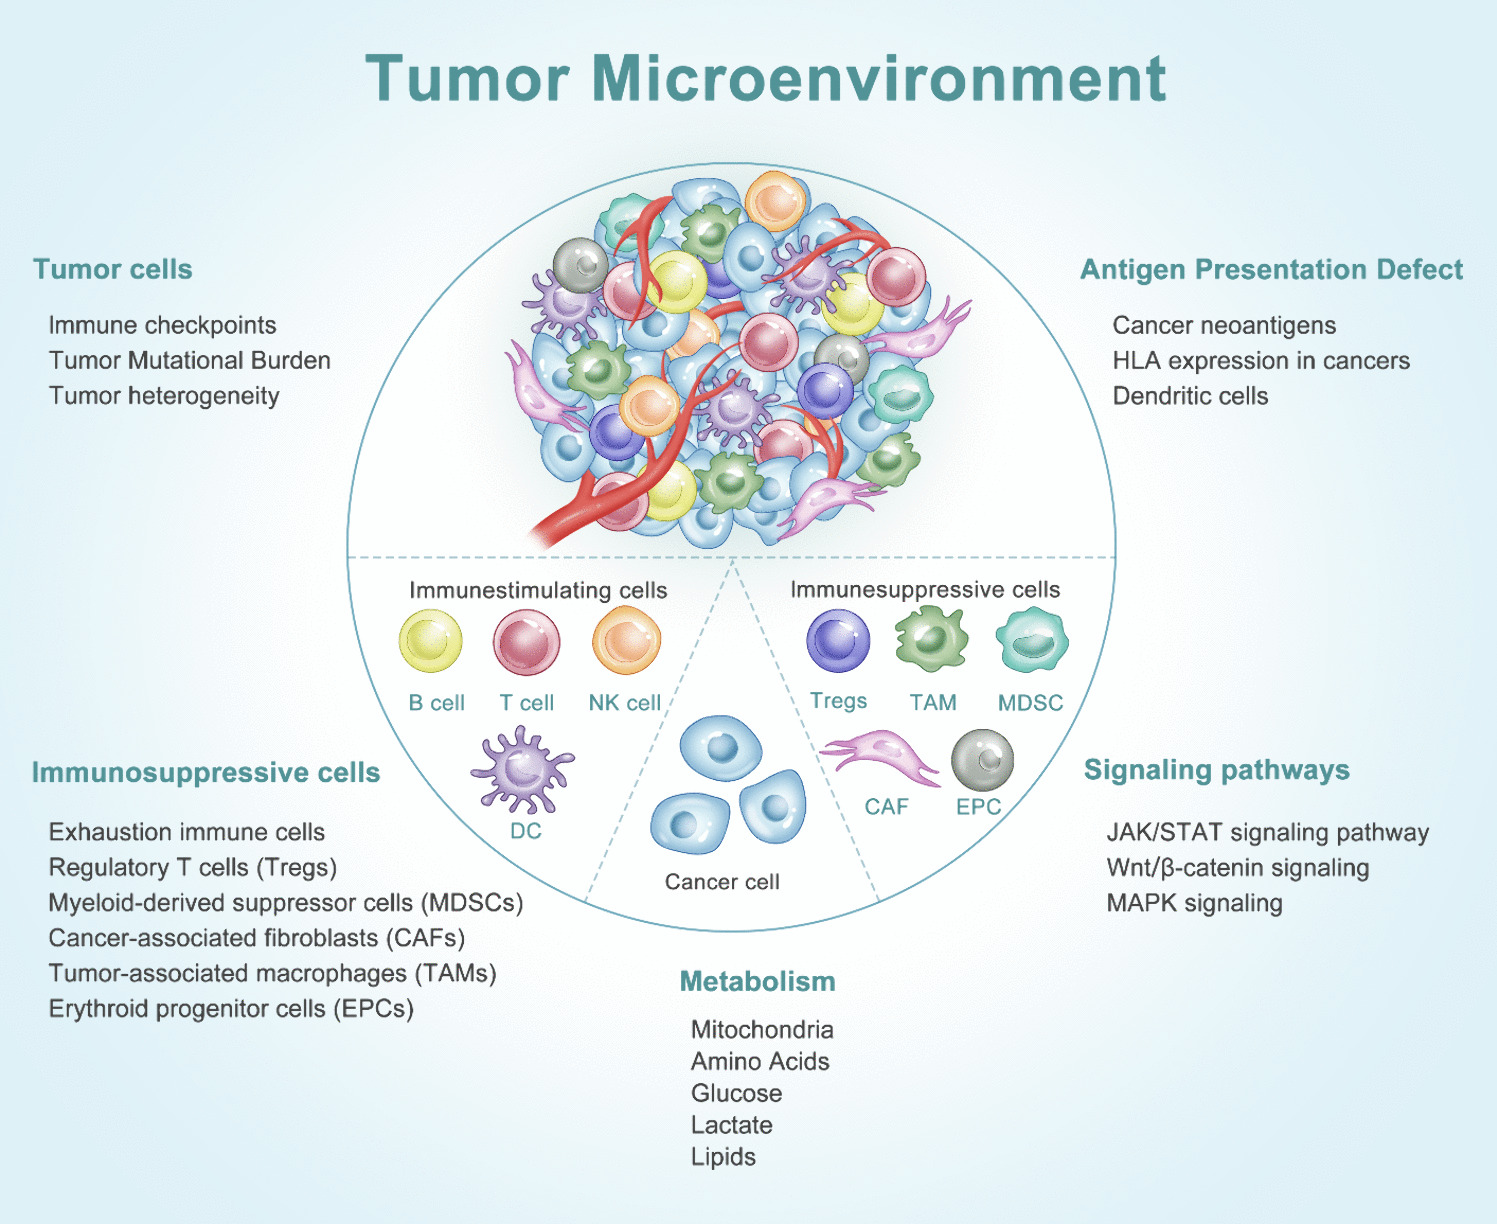 The immunosuppressive landscape in tumor microenvironment